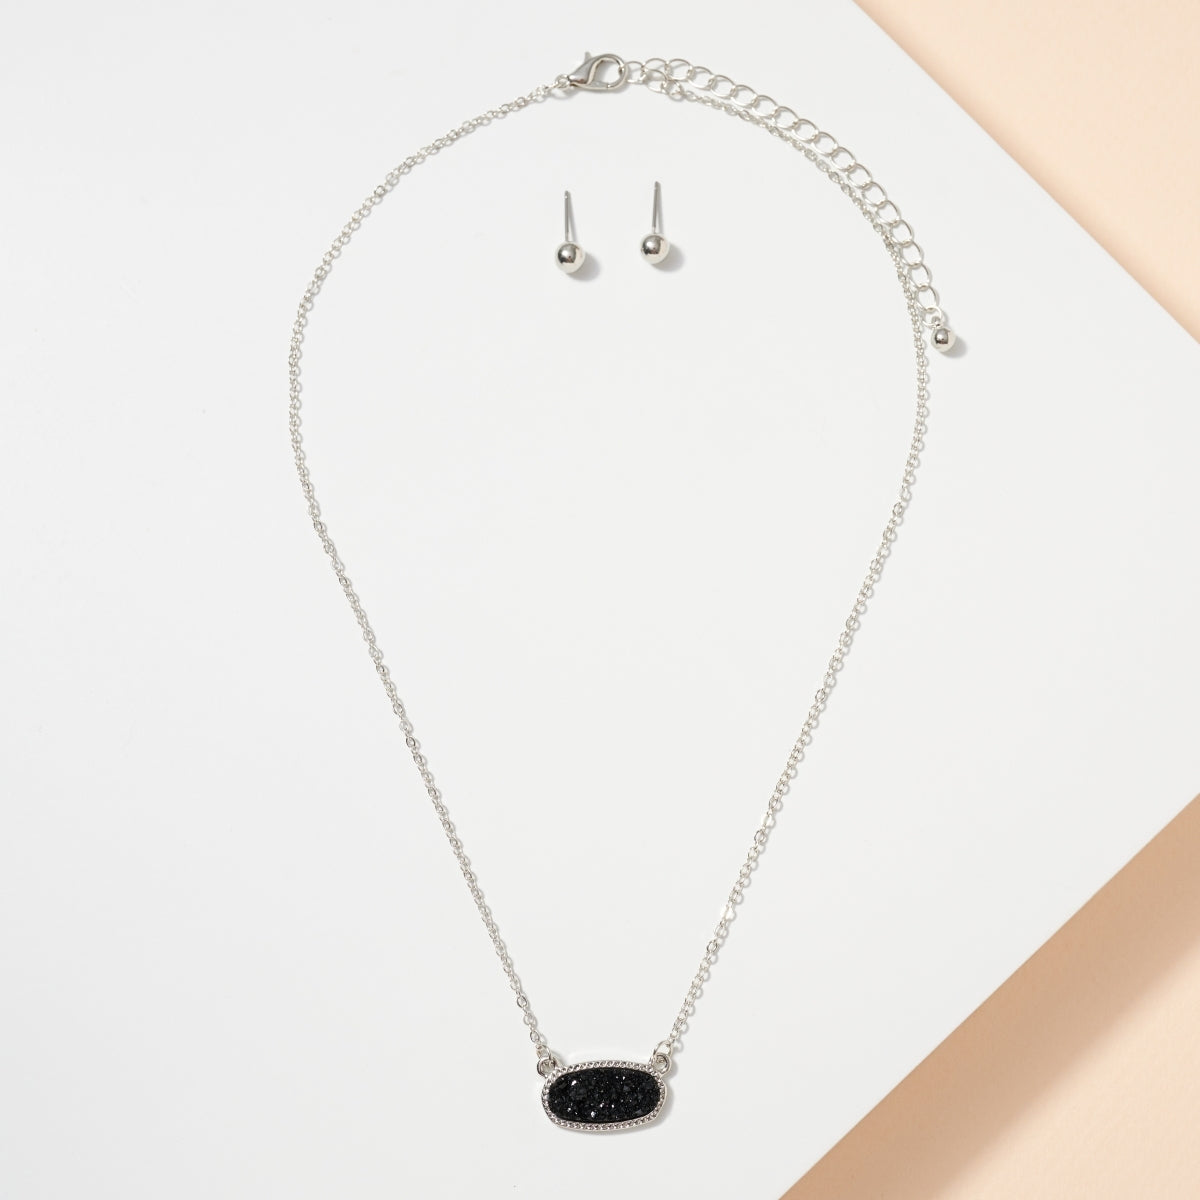 Dainty Oval Druzy Pendant Necklace & Earring Set - Black on Silver